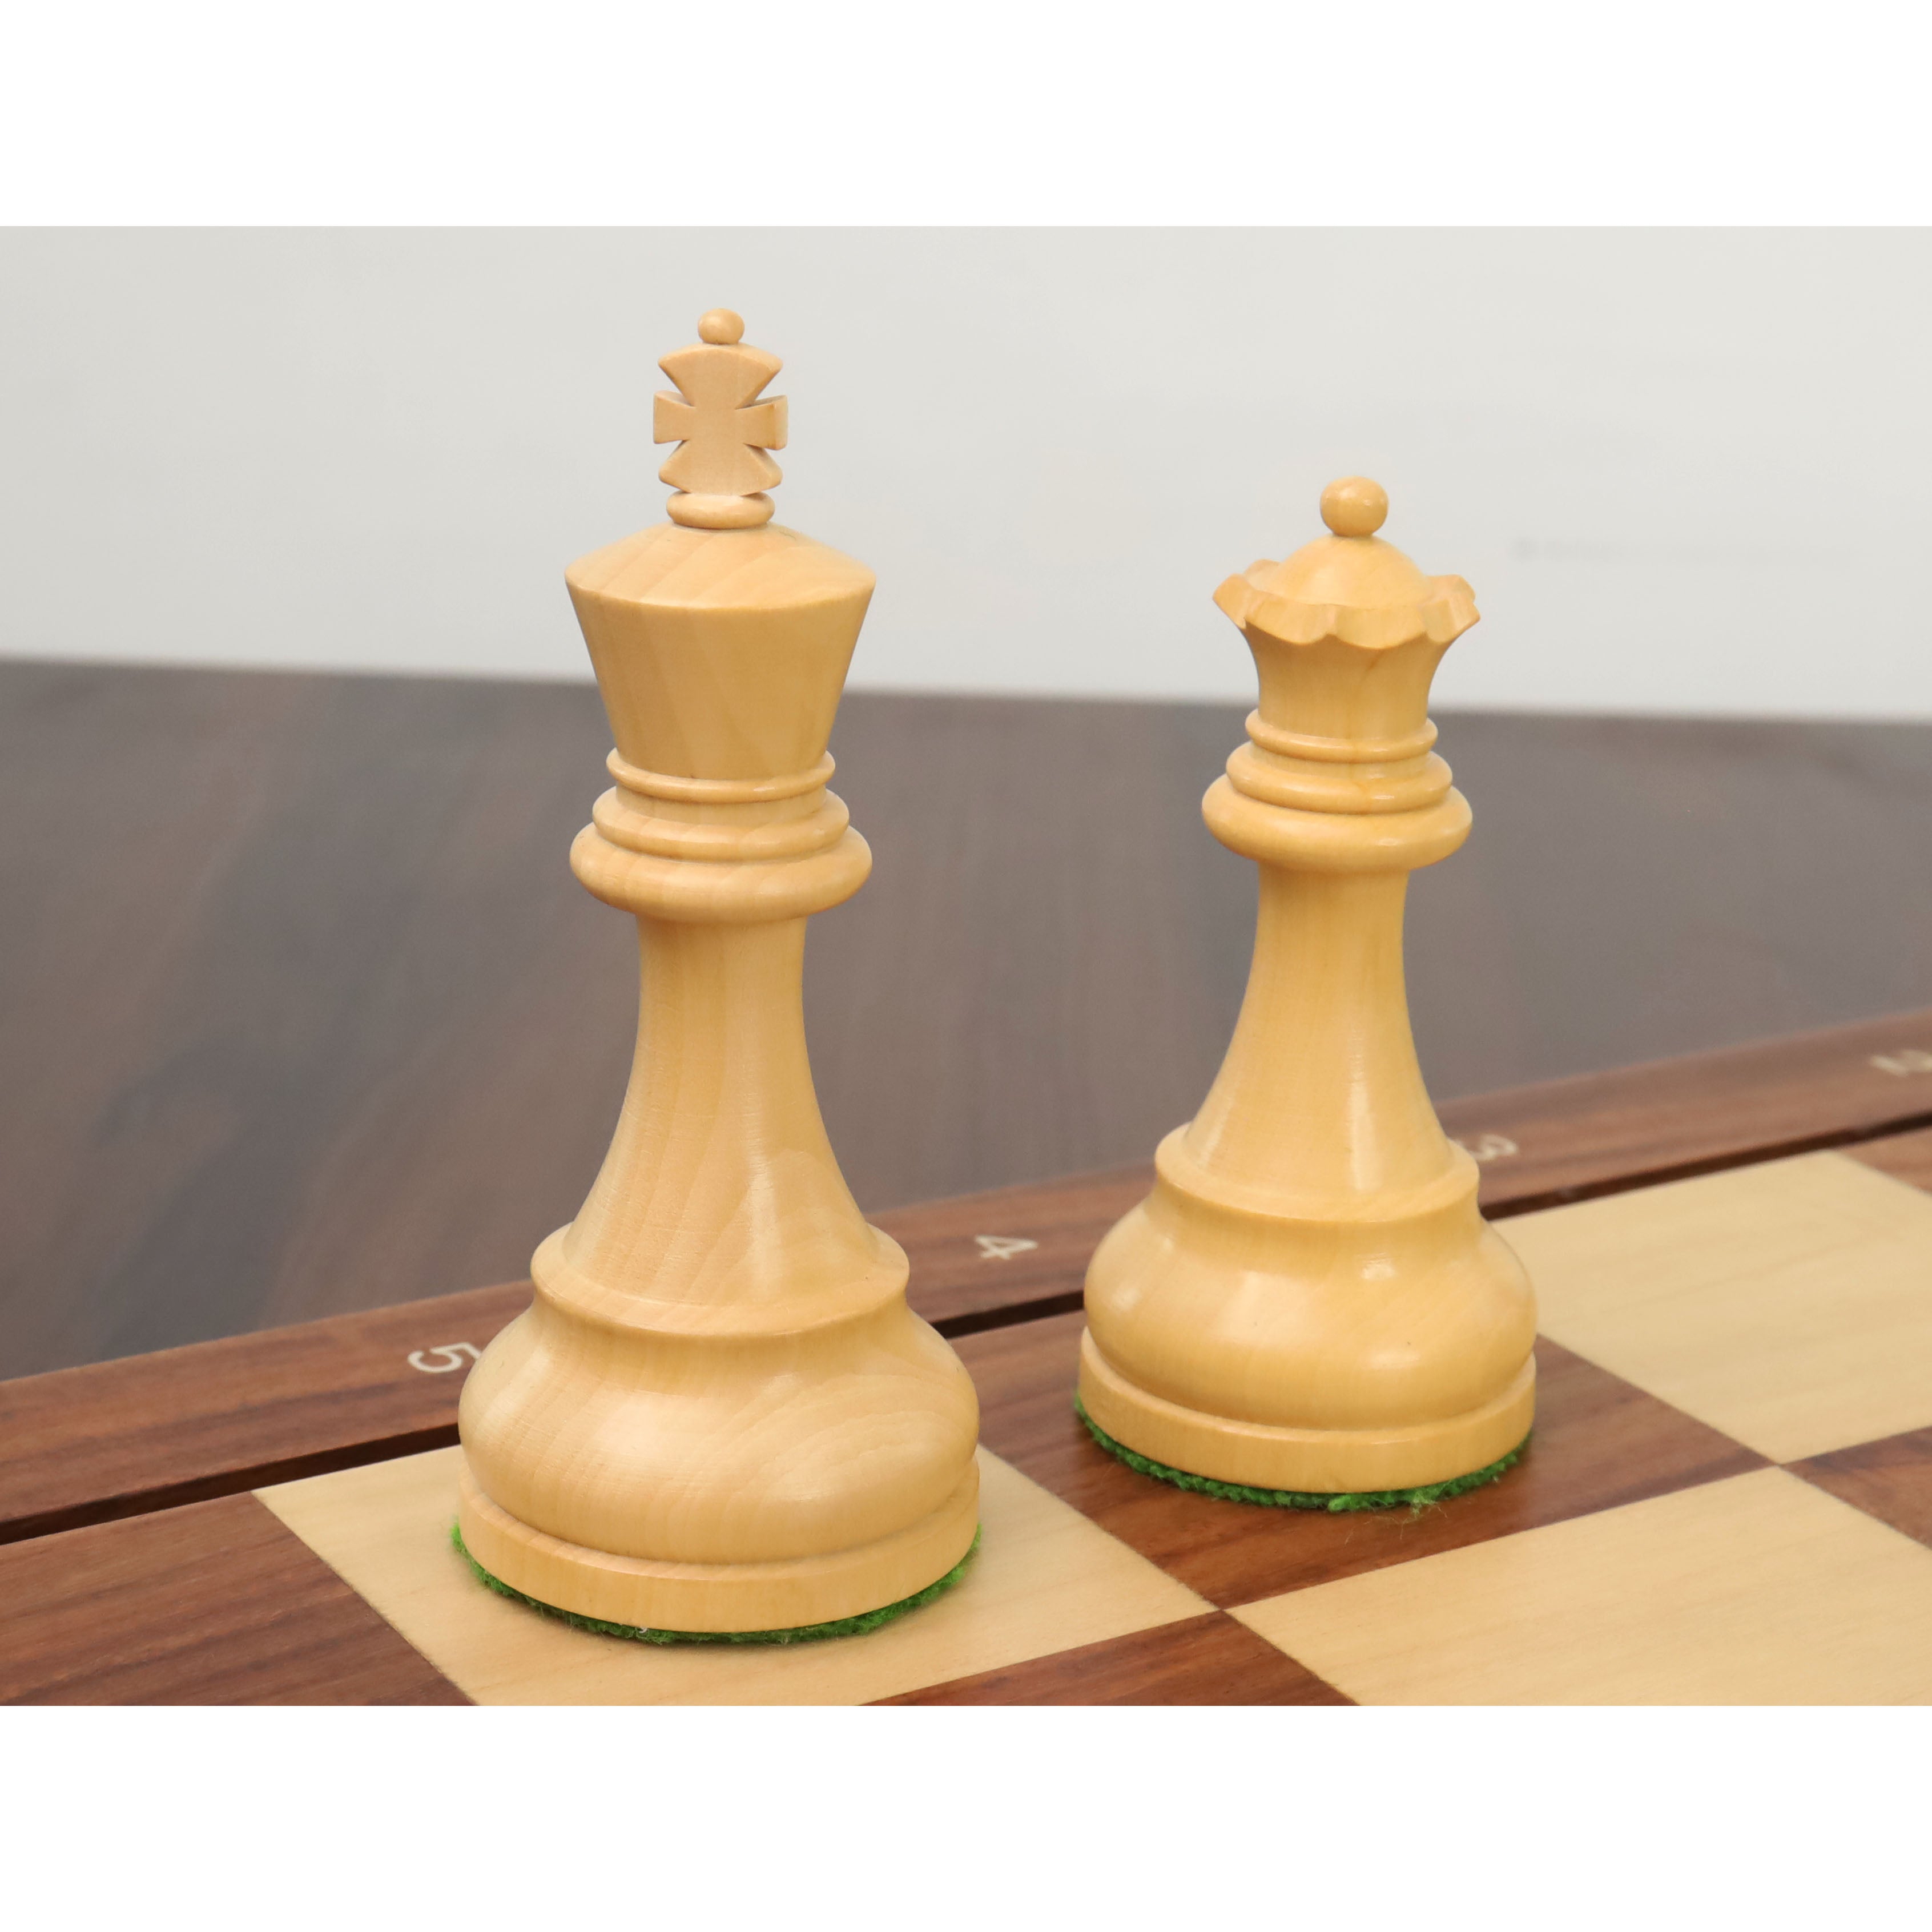 3.8" Reykjavik Series Staunton Wooden Chess Set- Chess Pieces Only - Weighted Sheesham Wood